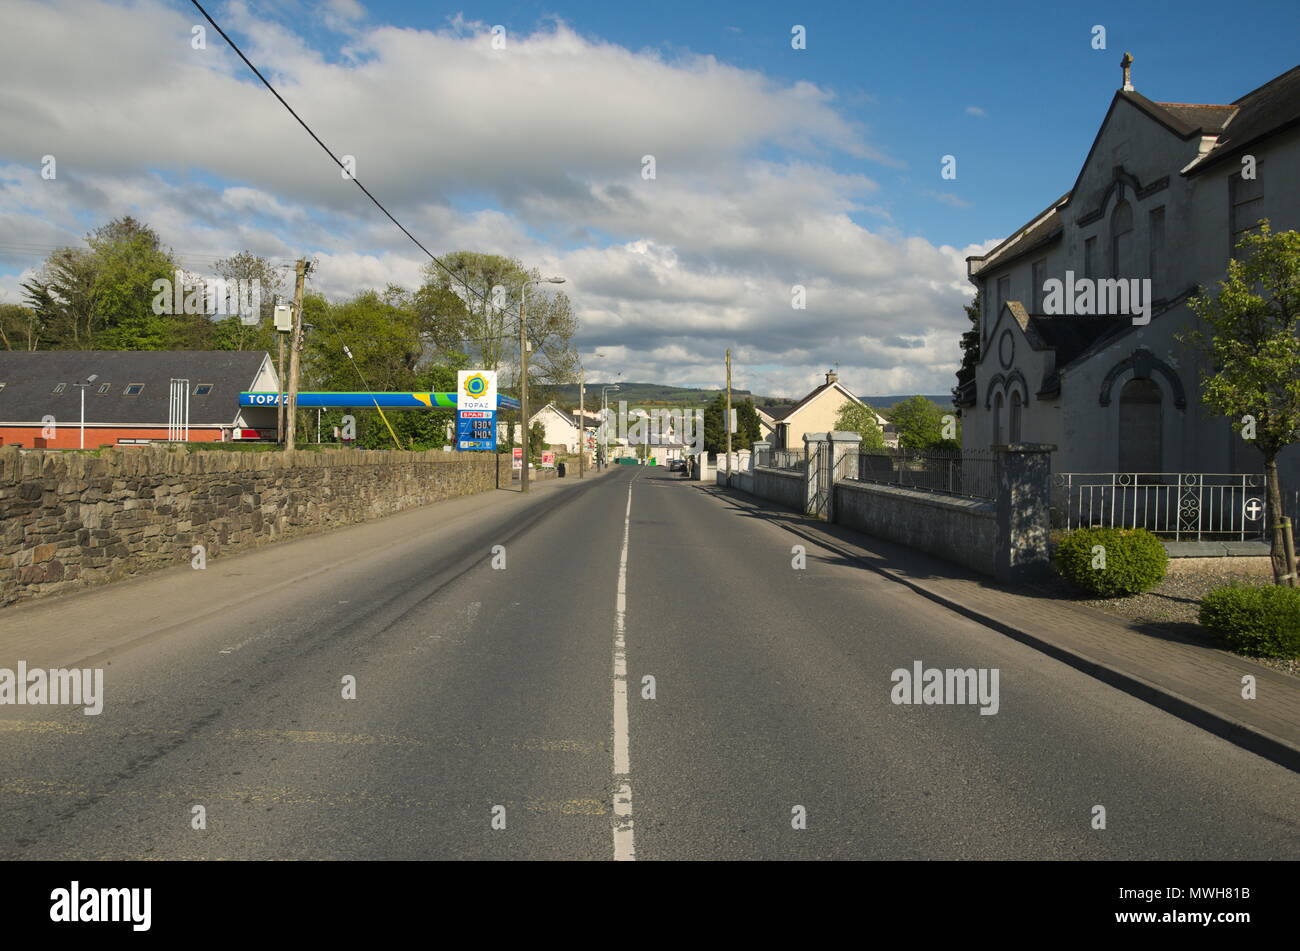 Newport highstreet in Limerick Foto Stock